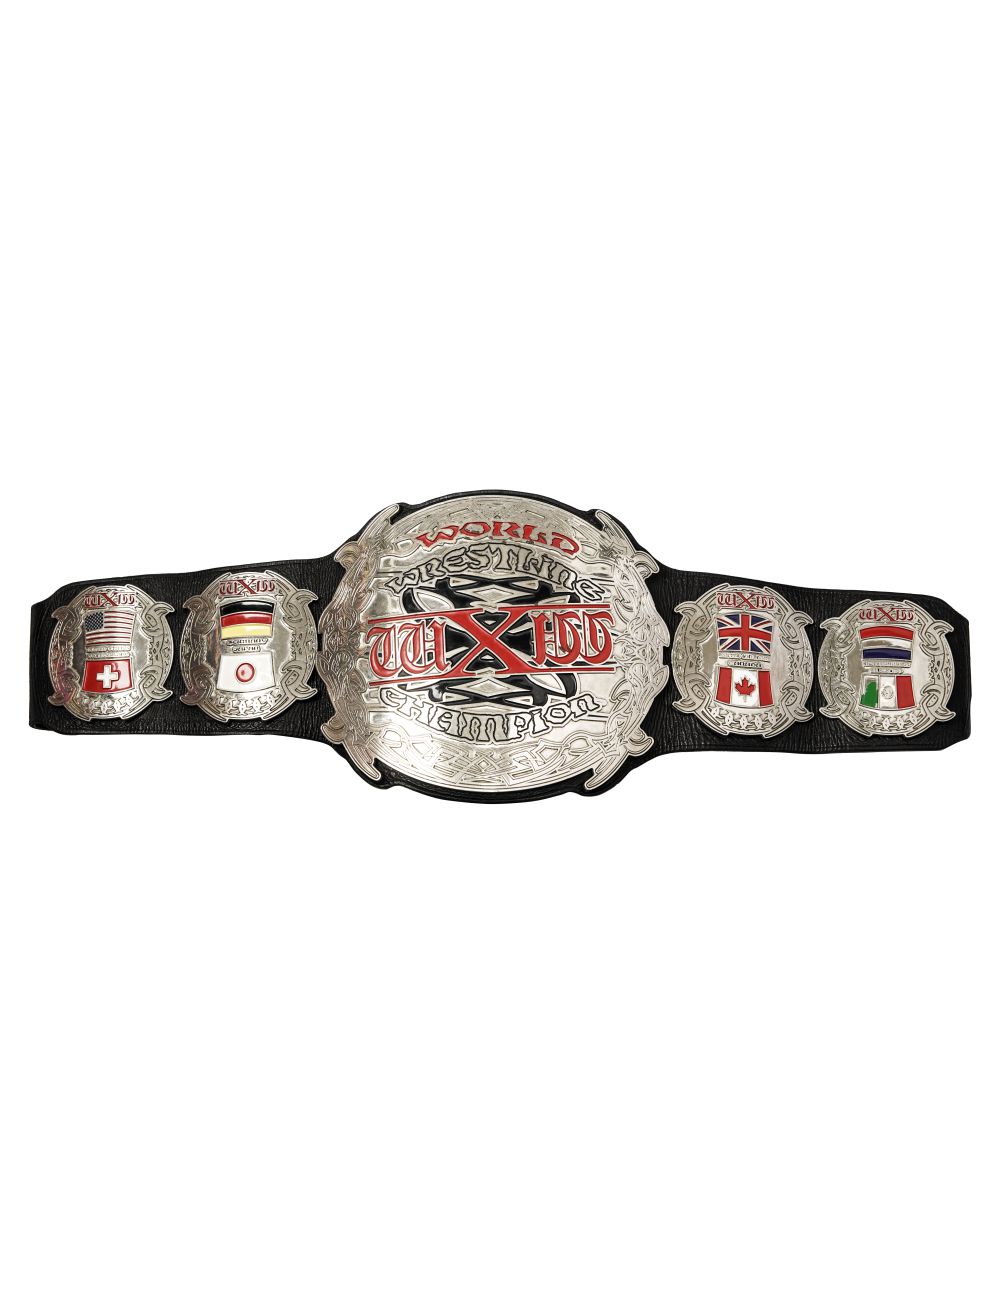 wXw Unified World Wrestling Championship - Wikipedia